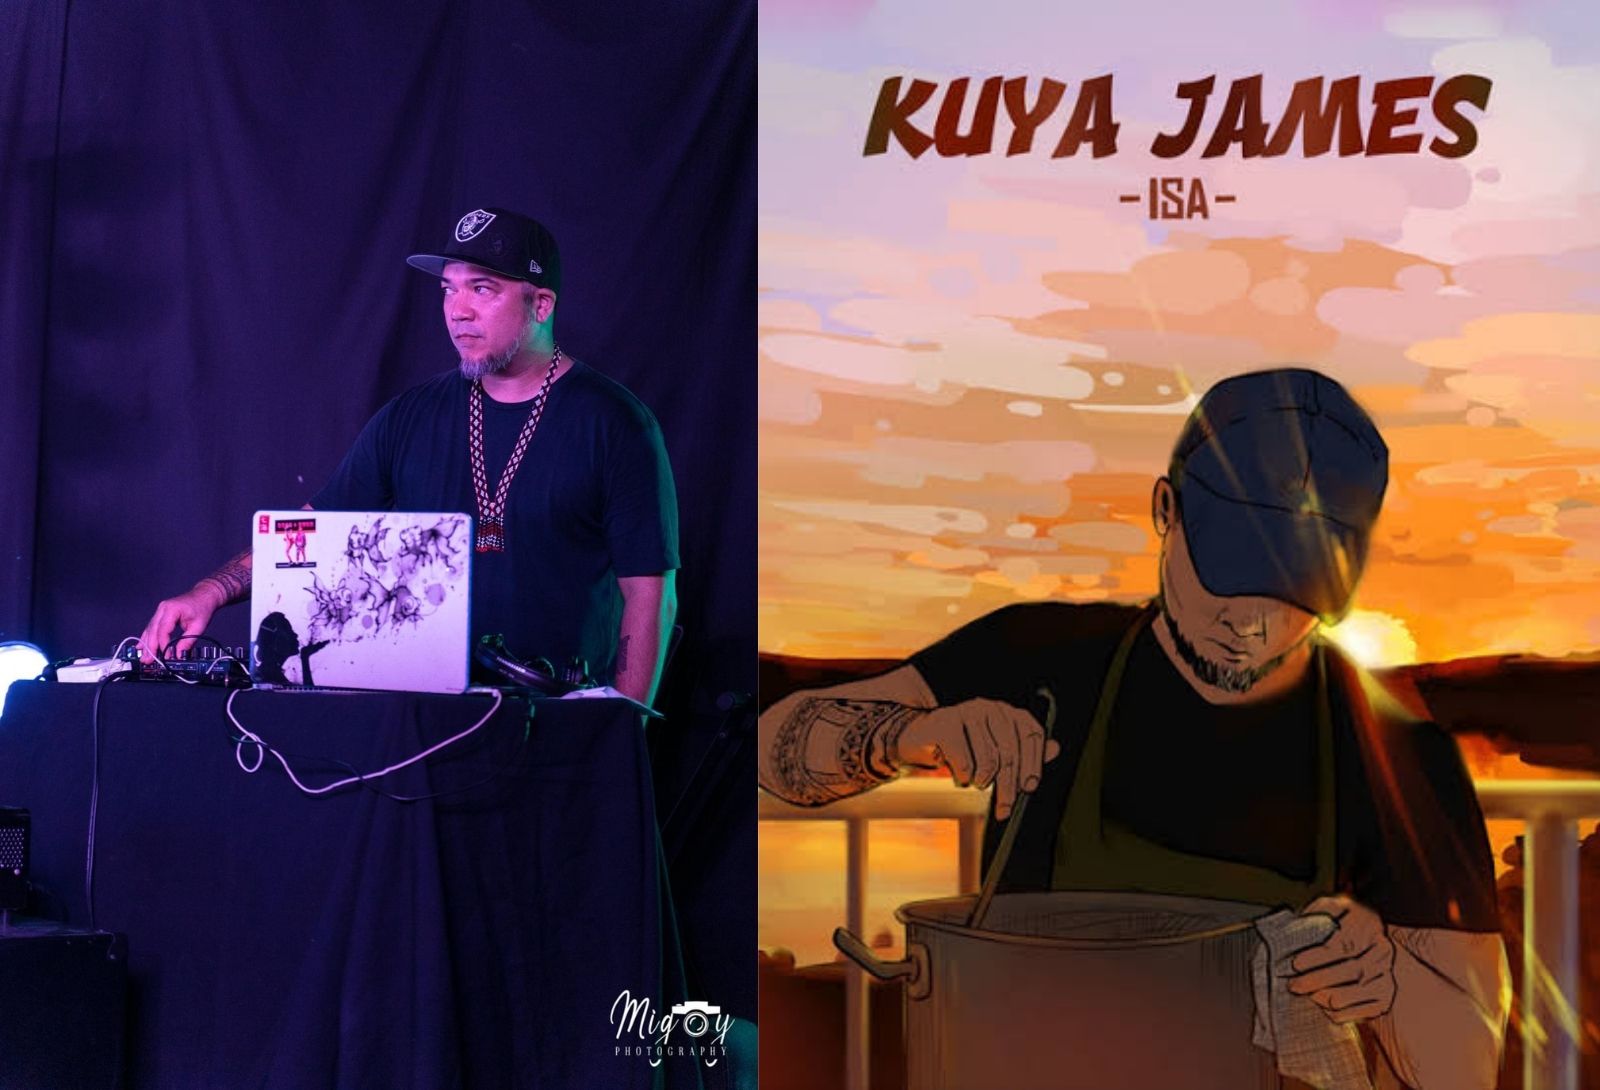 Kuya James album Isa is nominated at the ARIA Music Awards 2021